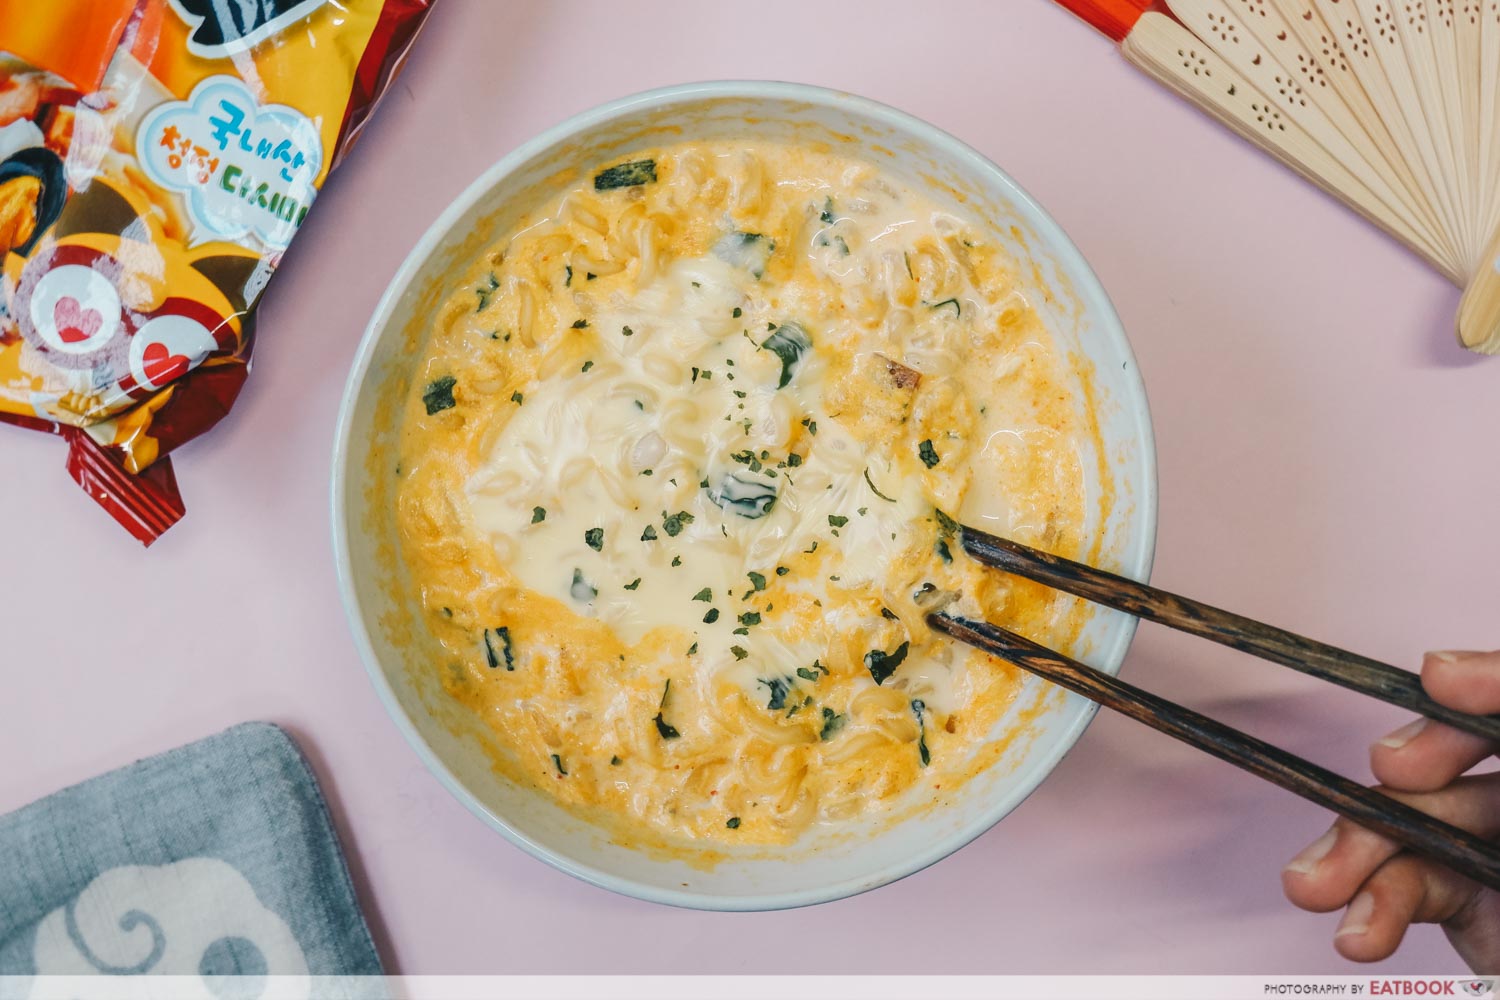 Instant Noodles Recipes - Spicy Cheesy Milk Ramen